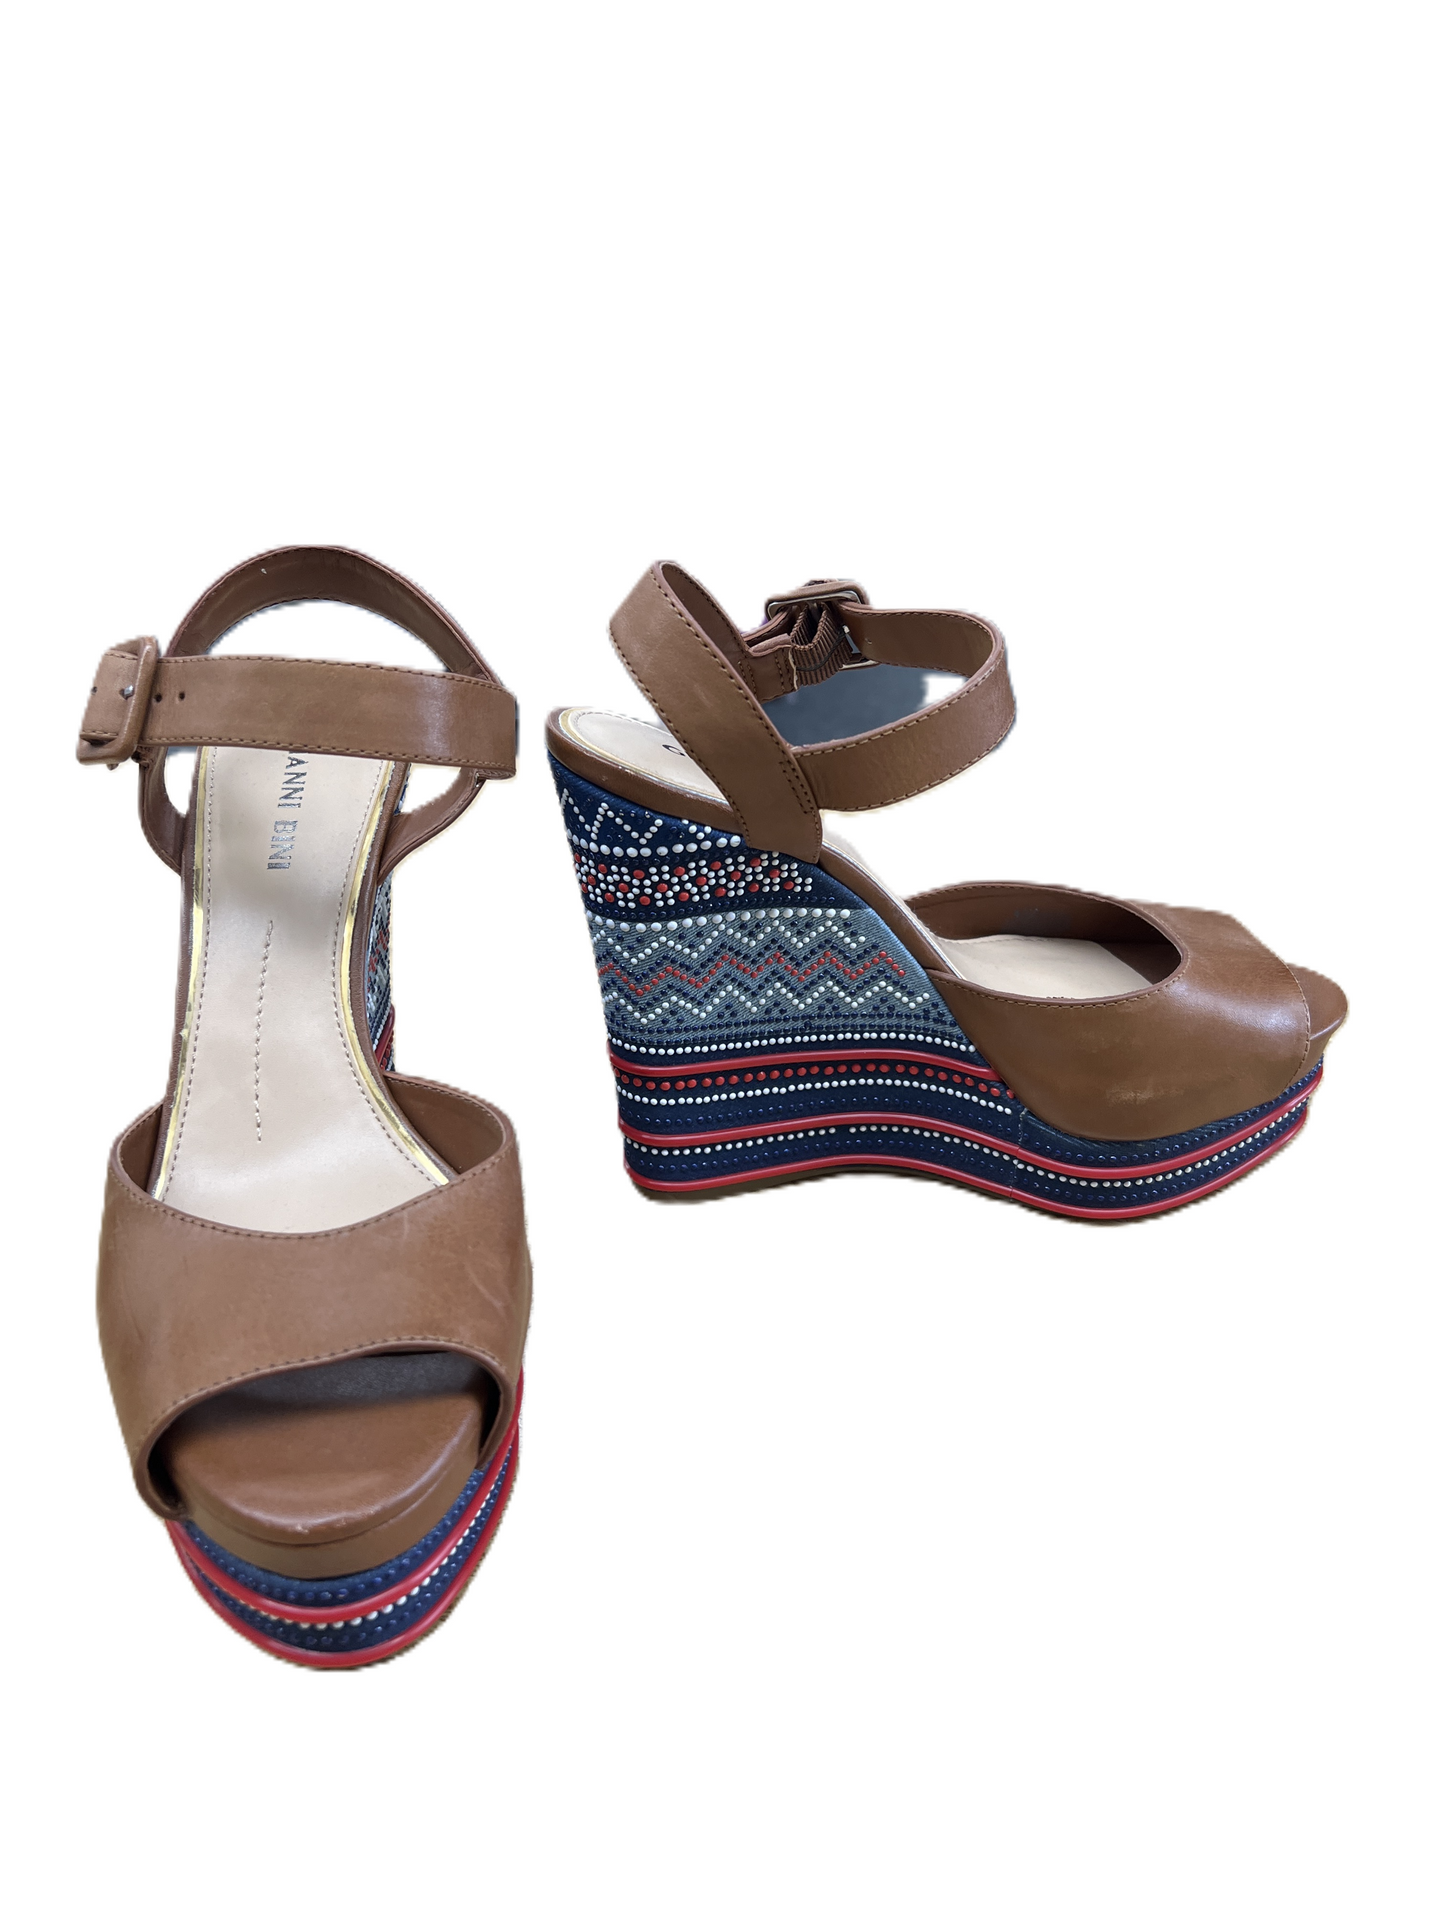 Sandals Heels Wedge By Gianni Bini  Size: 8.5